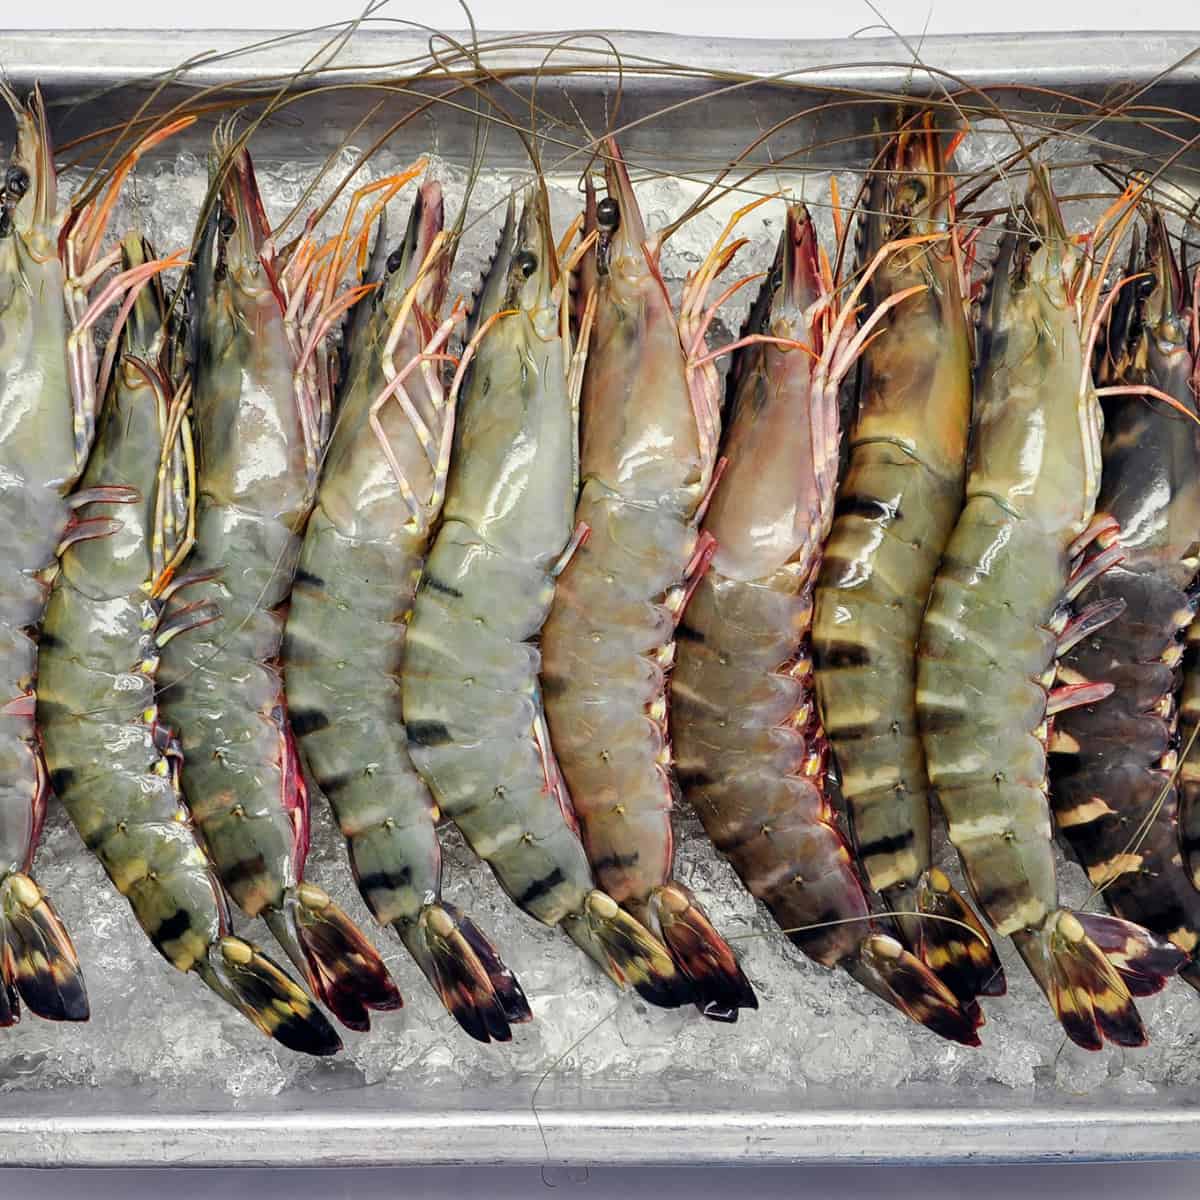 sheet tray of large head on tigger shrimp